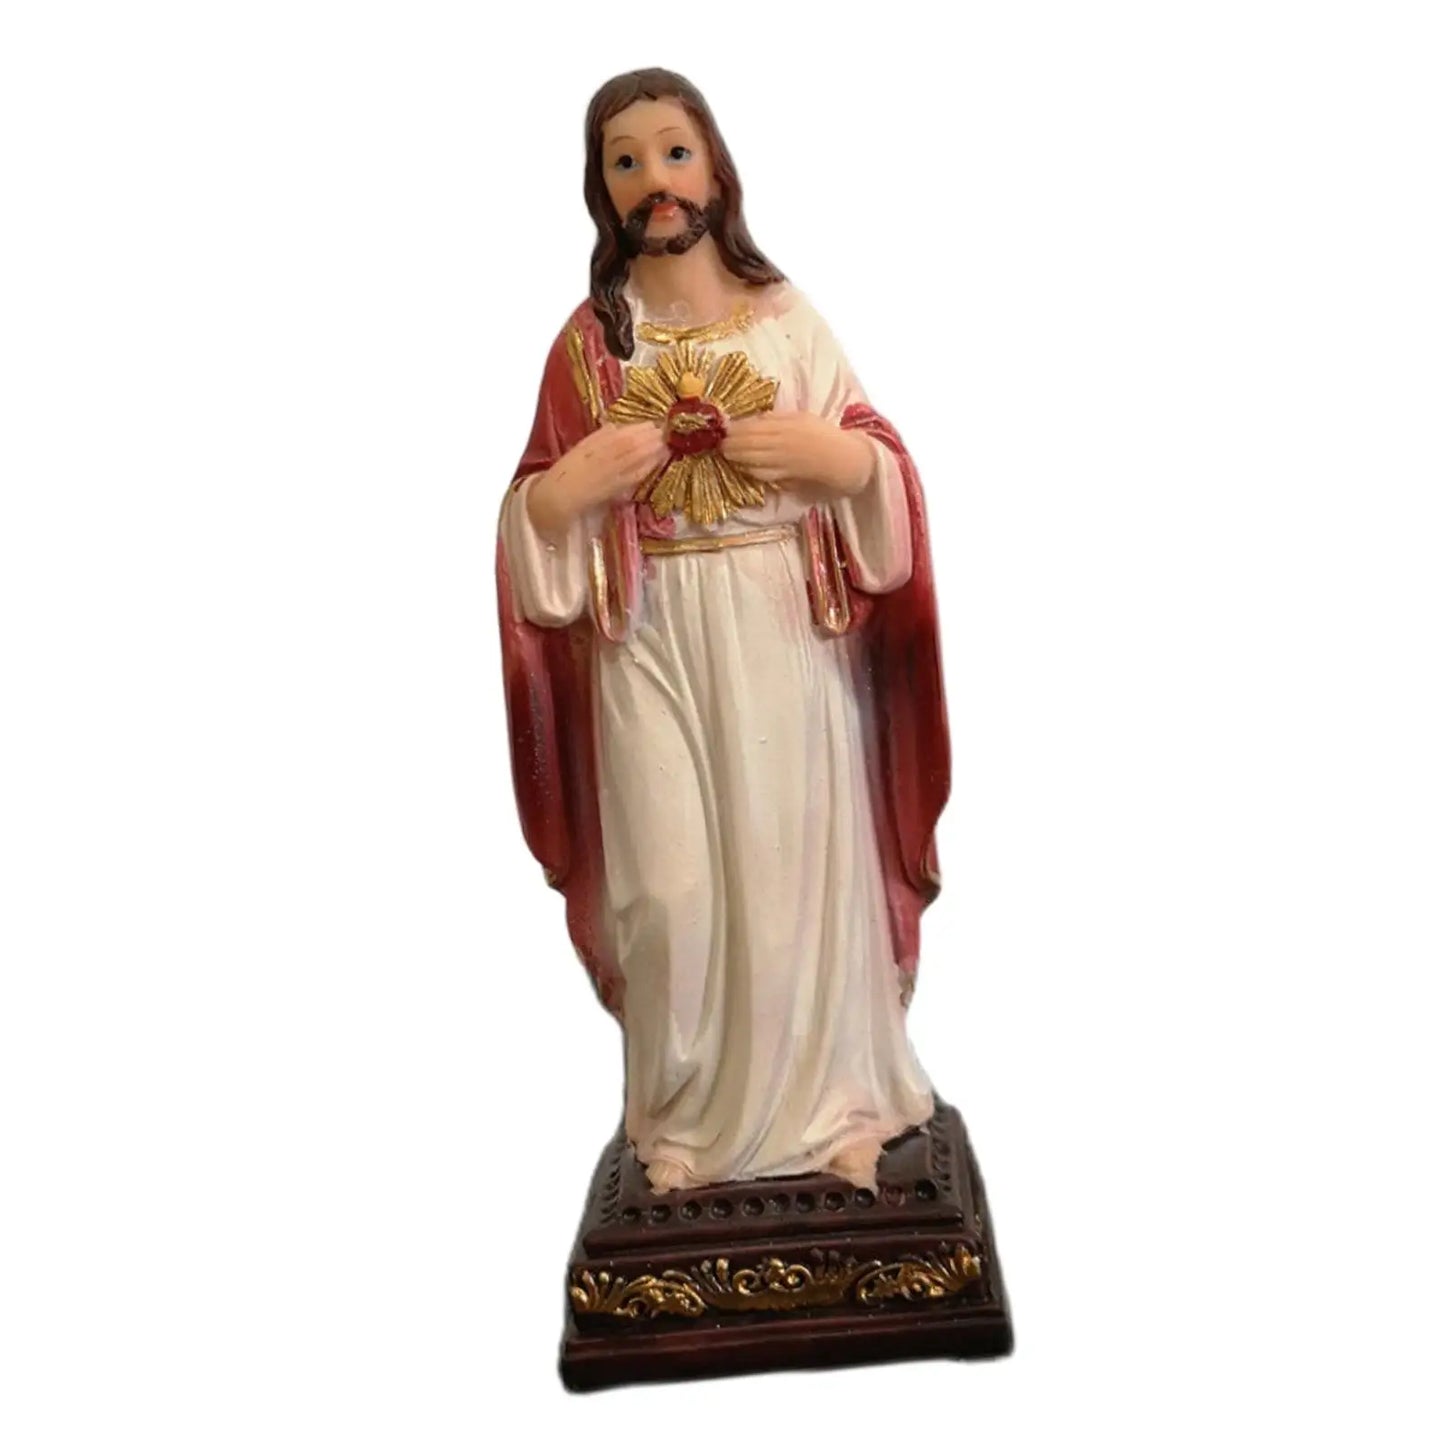 Virgin Mary Statue Artwork 5.12'' Collection Desk Display Religious Resin Statue Figurine for Shelf Bedroom Desk Church Office